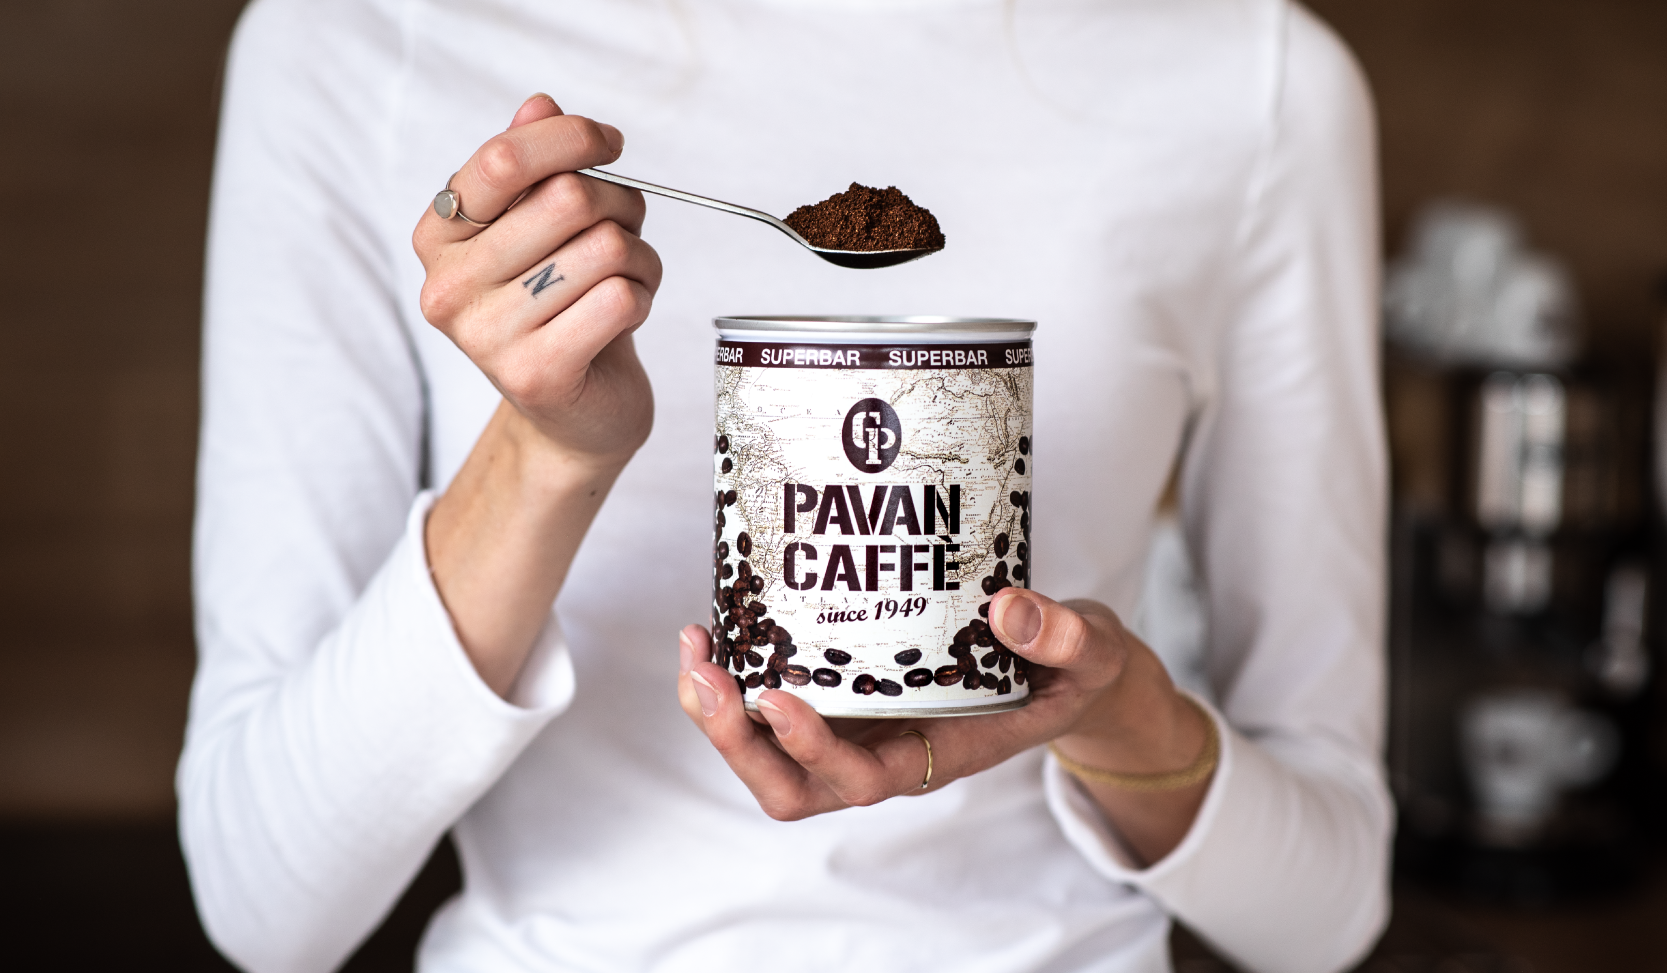 Pavan caffe